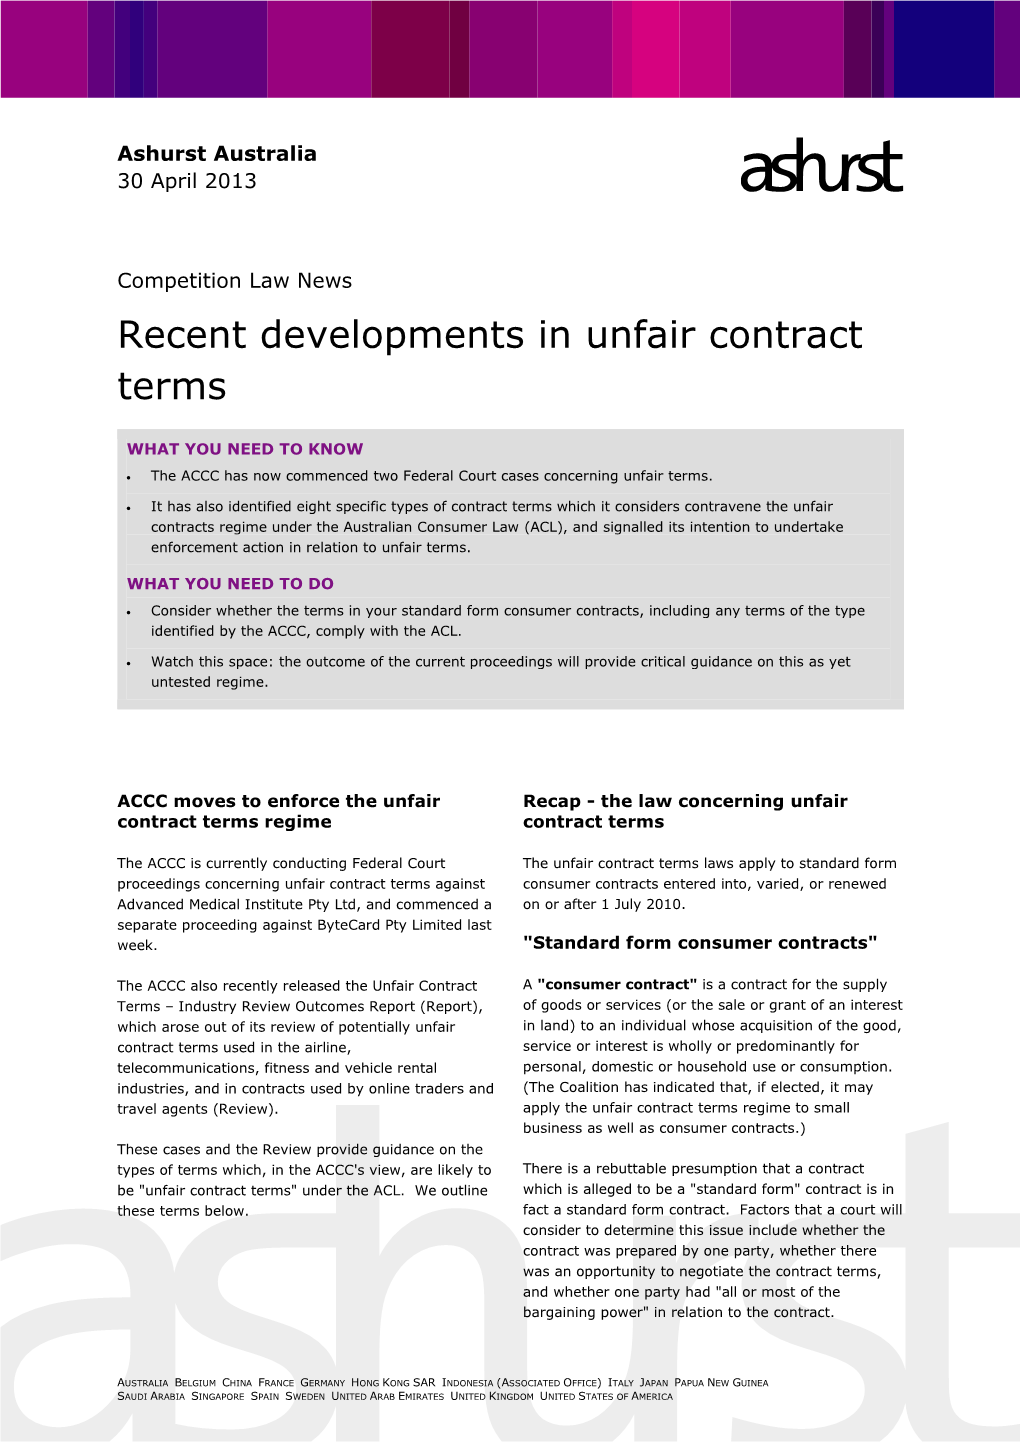 Recent Developments in Unfair Contract Terms